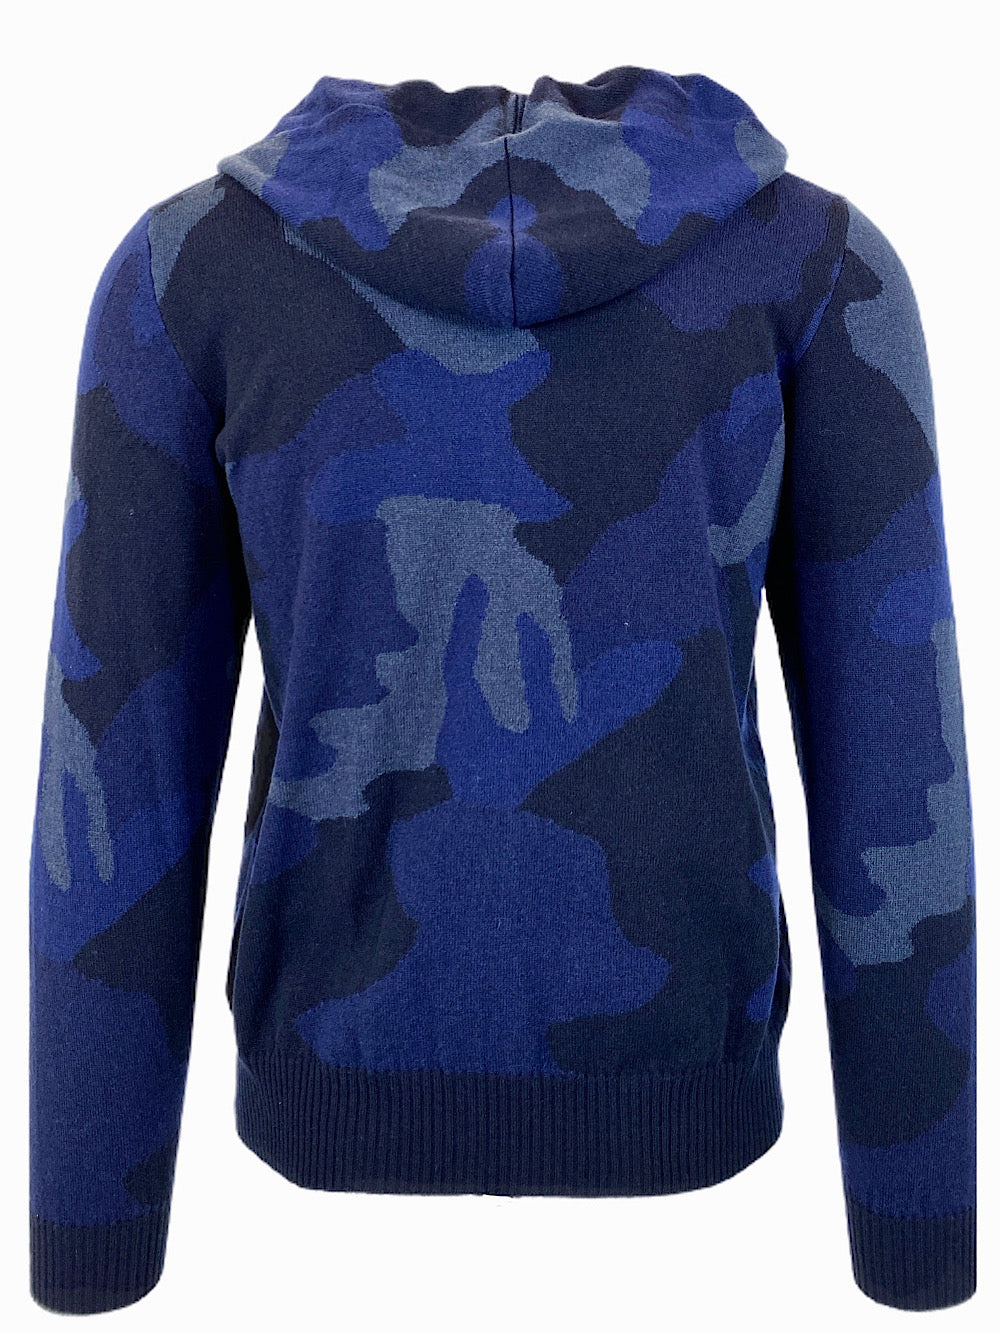 Settefili Cashmere Hooded Sweatshirt with Blue Camouflage Inlays